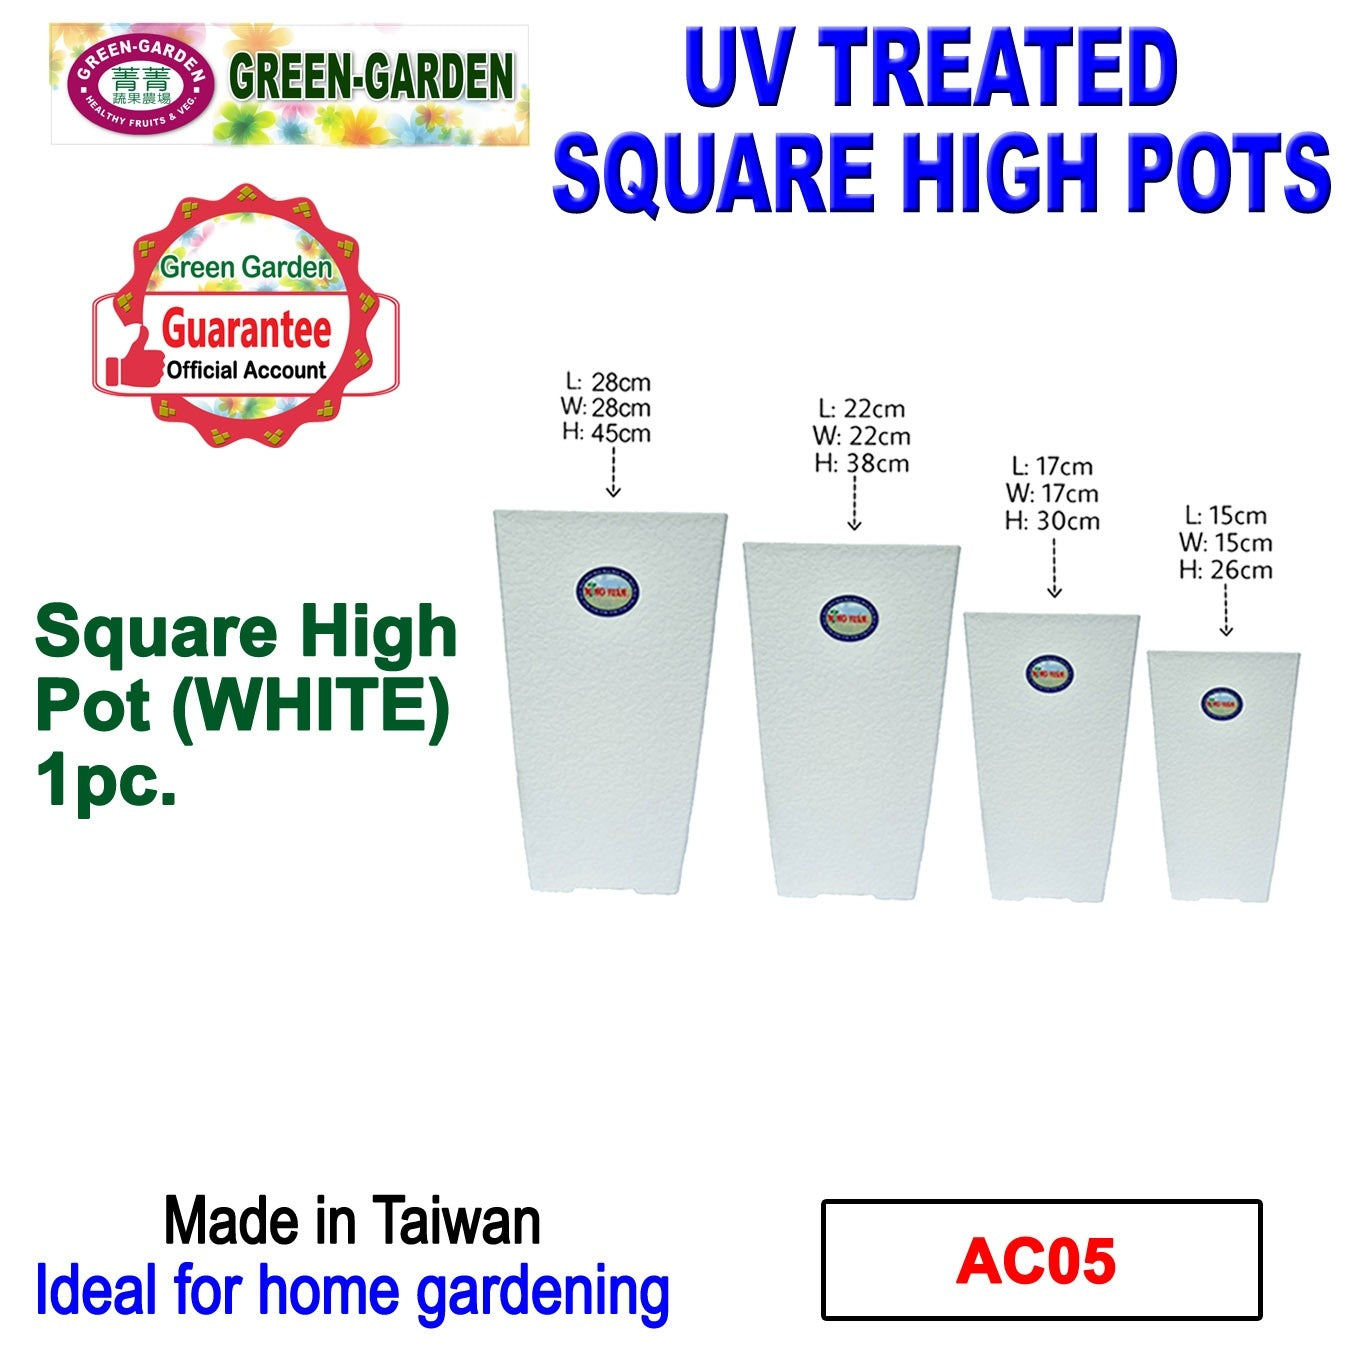 UV TREATED Square High Pot Size: 17x17x30cm